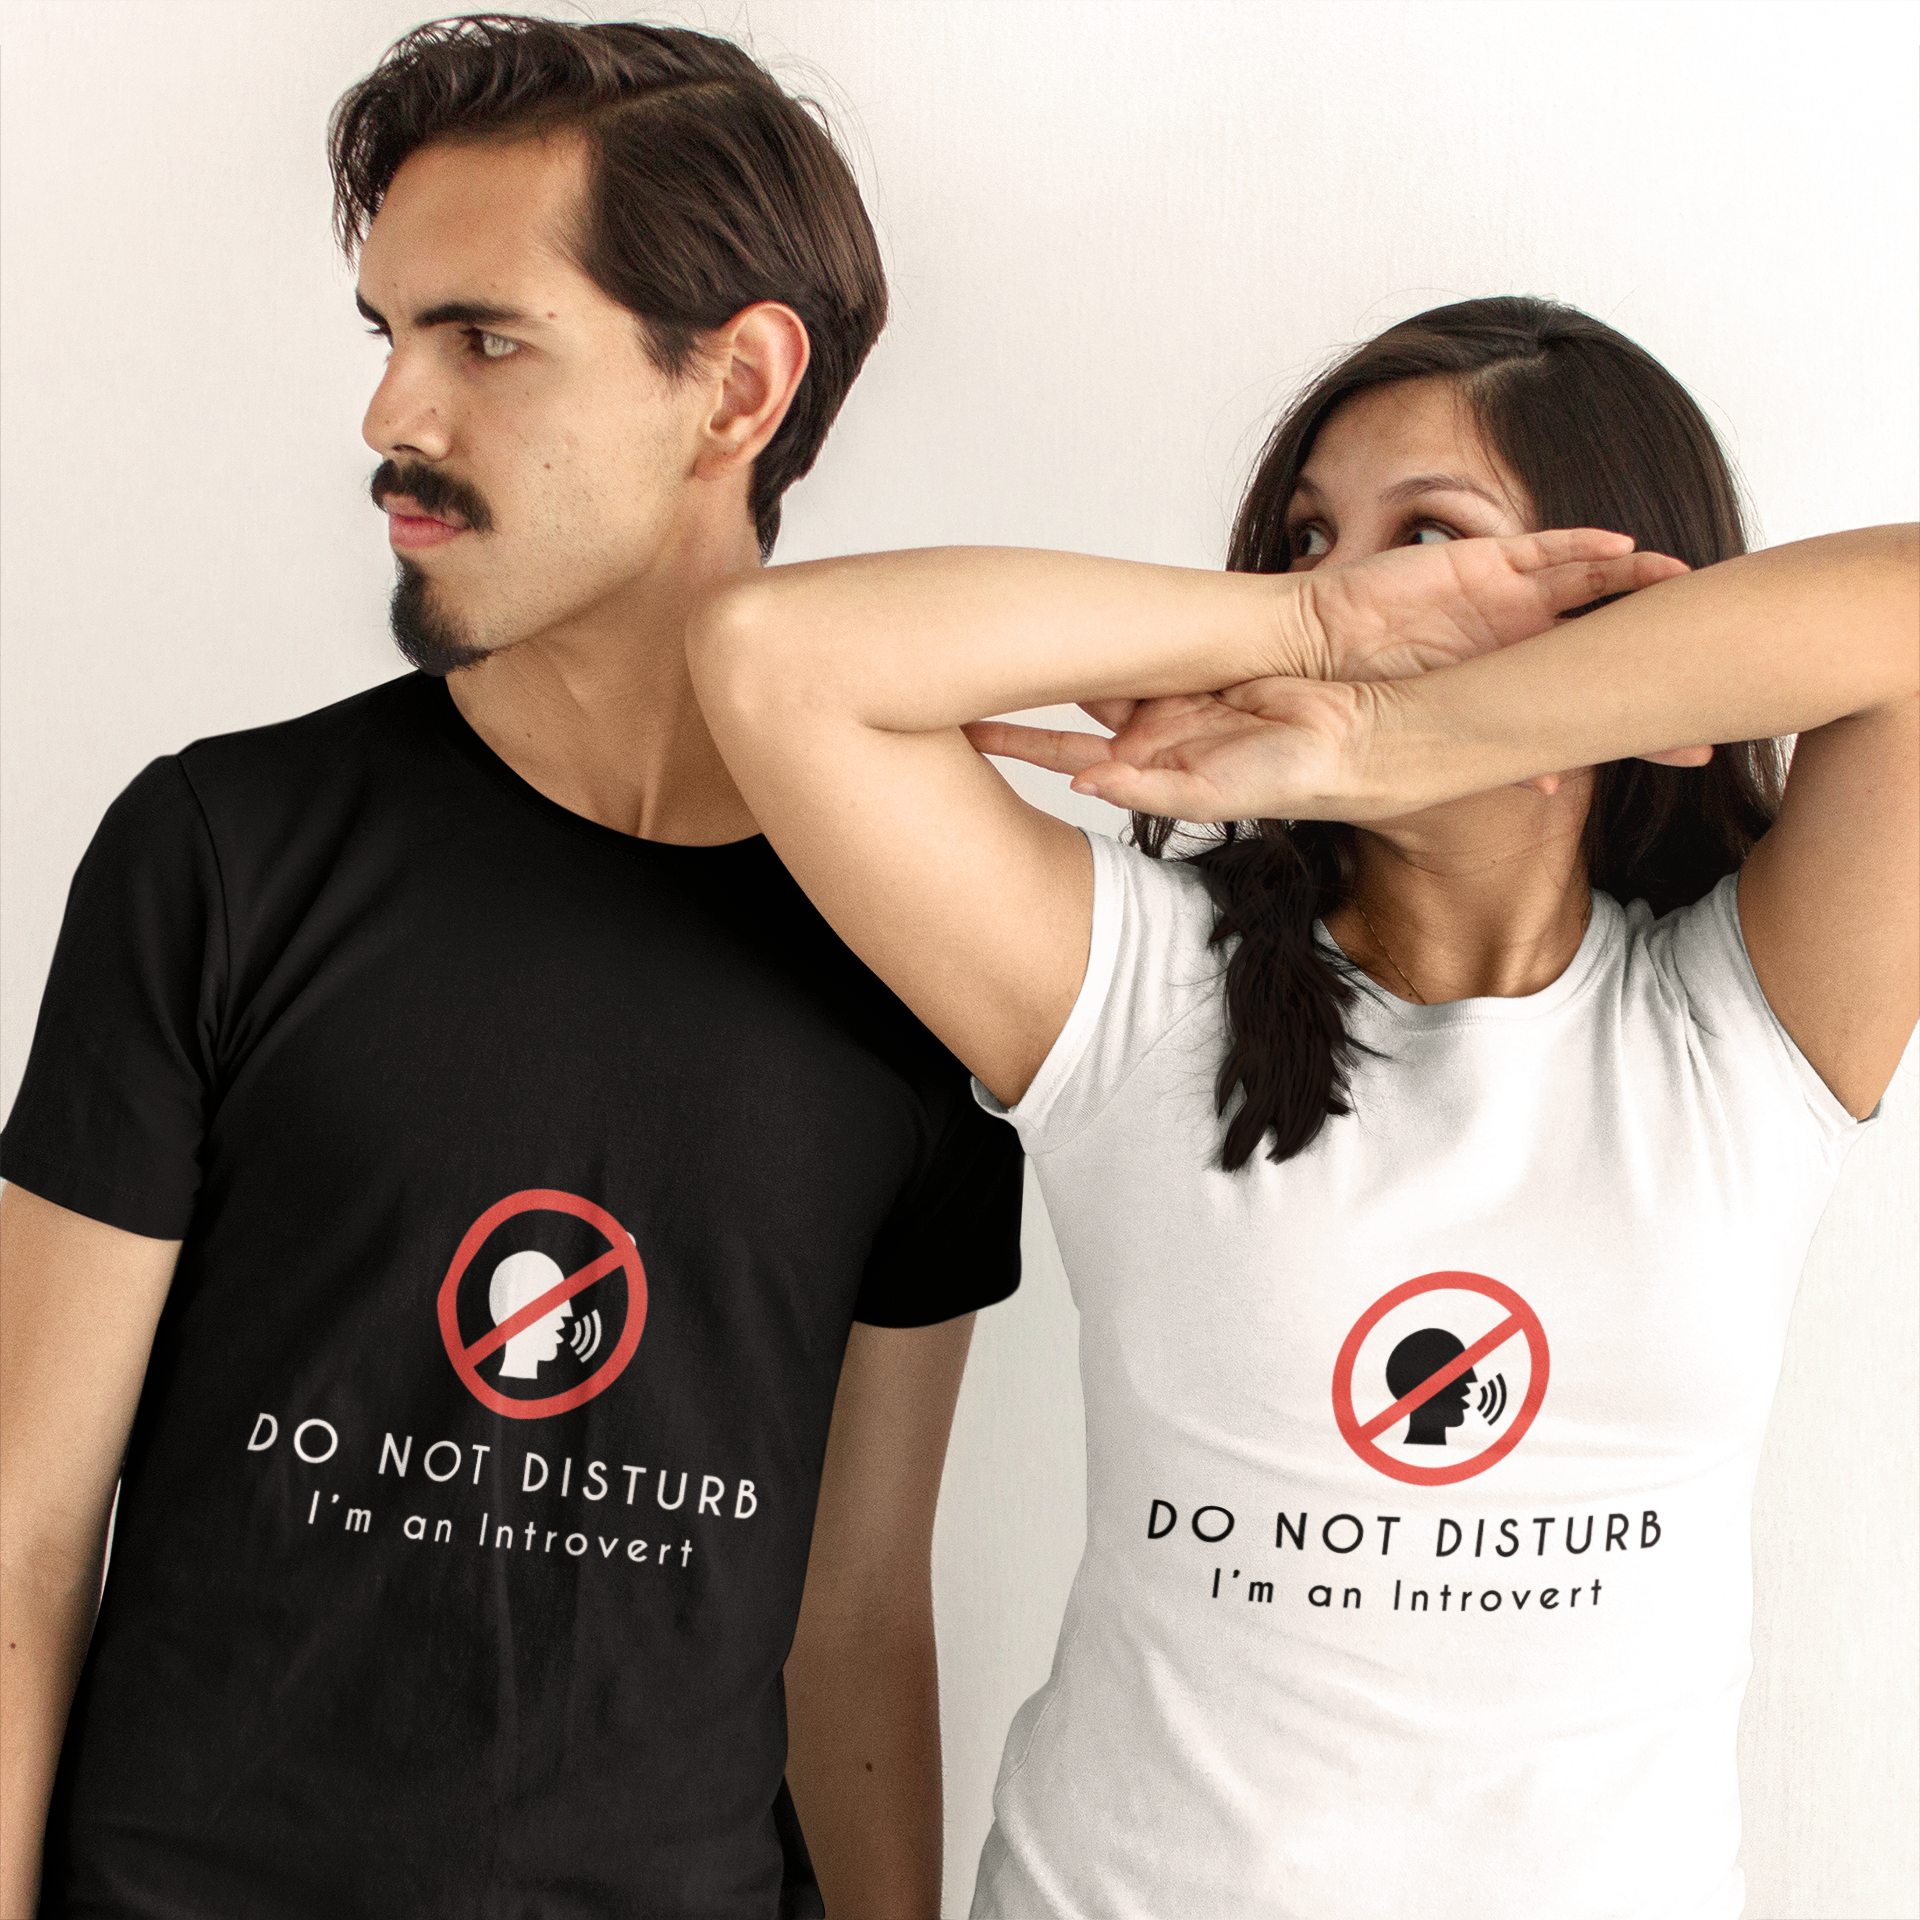 "Do Not Disturb" Short-Sleeve Unisex T-Shirt (White)